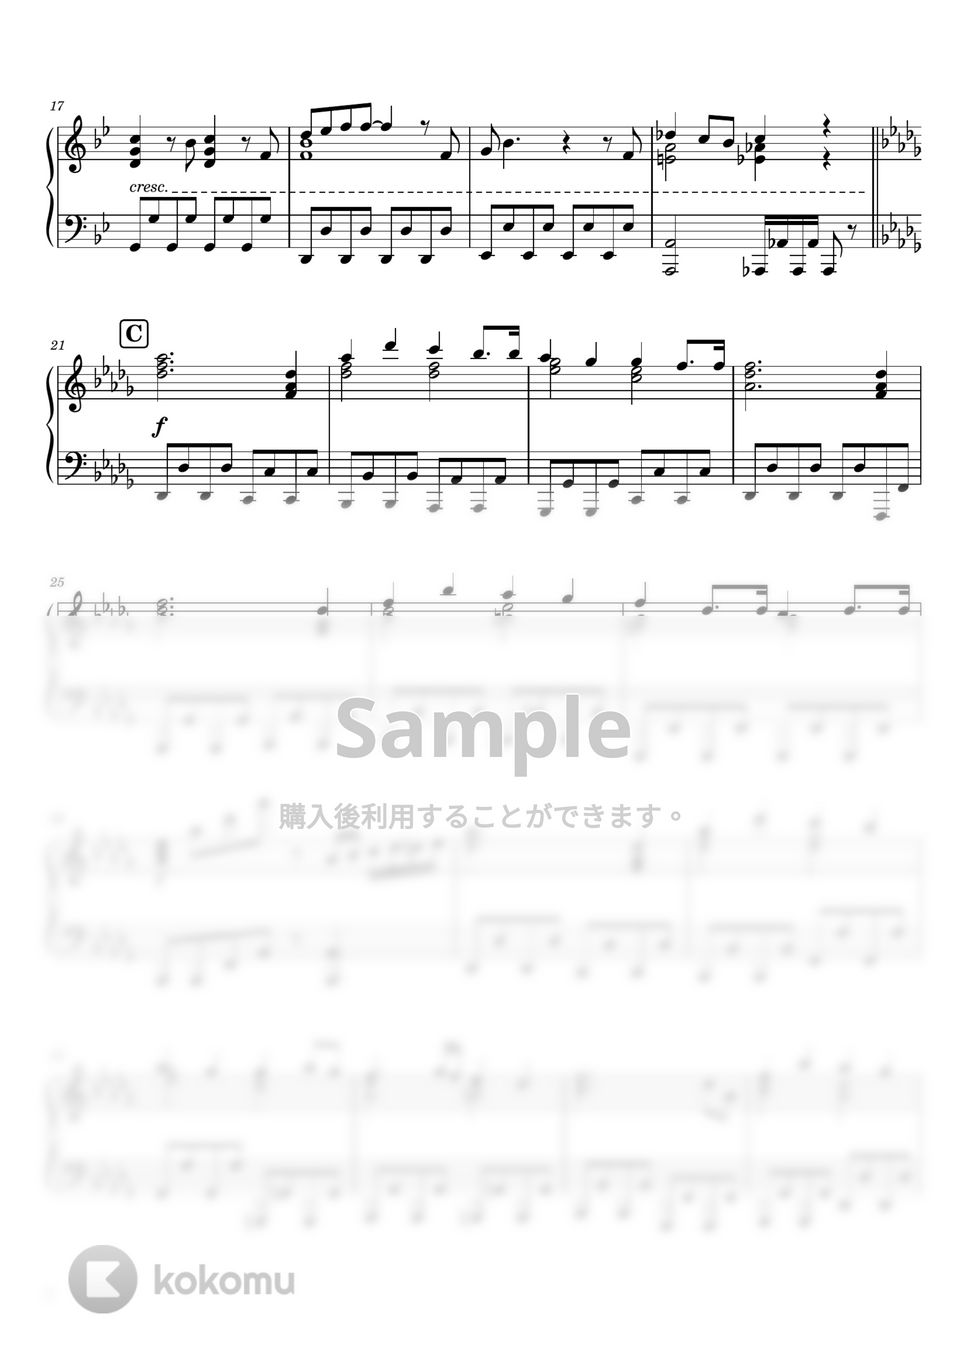 Mrs. GREEN APPLE - ニュー・マイ・ノーマル (ピアノソロ / 中級～上級) by SuperMomoFactory